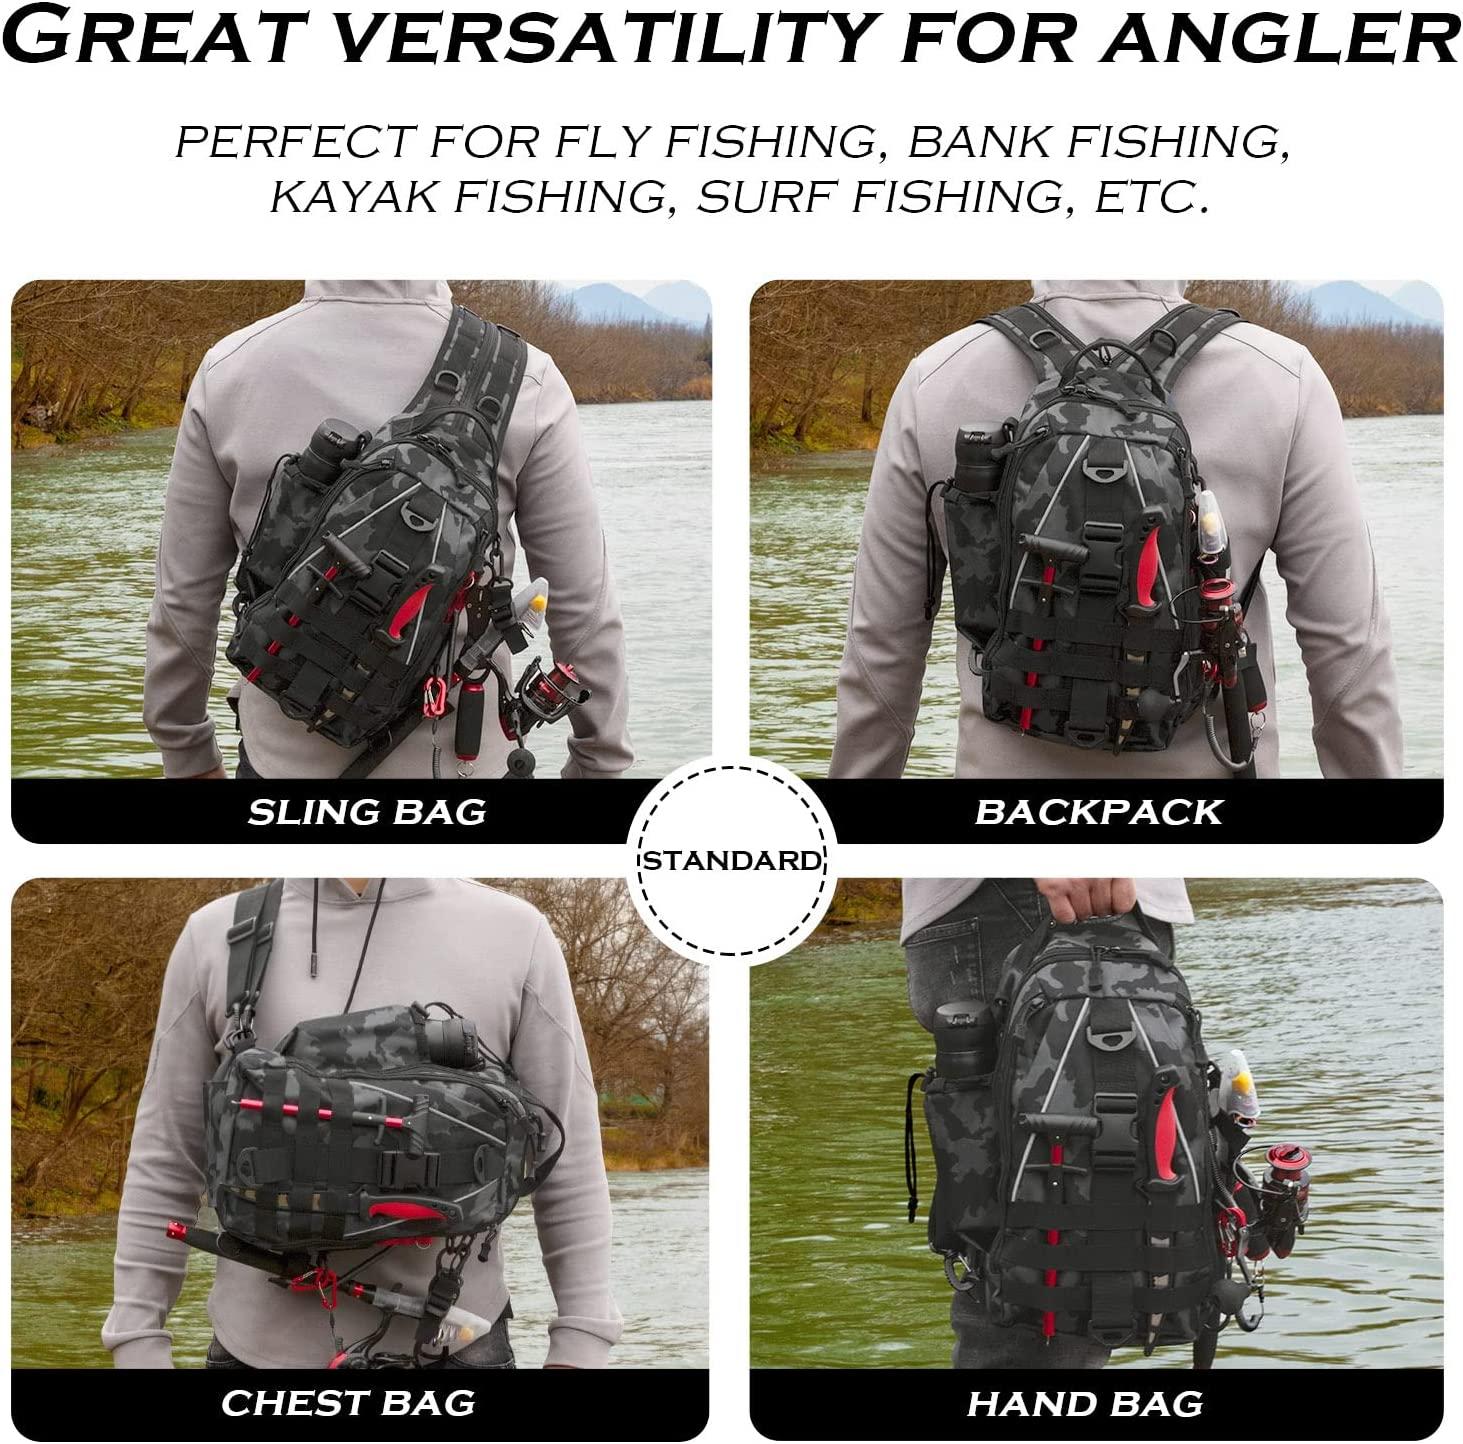 Ghosthorn Fishing Backpack Tackle Sling Bag - Fishing Backpack